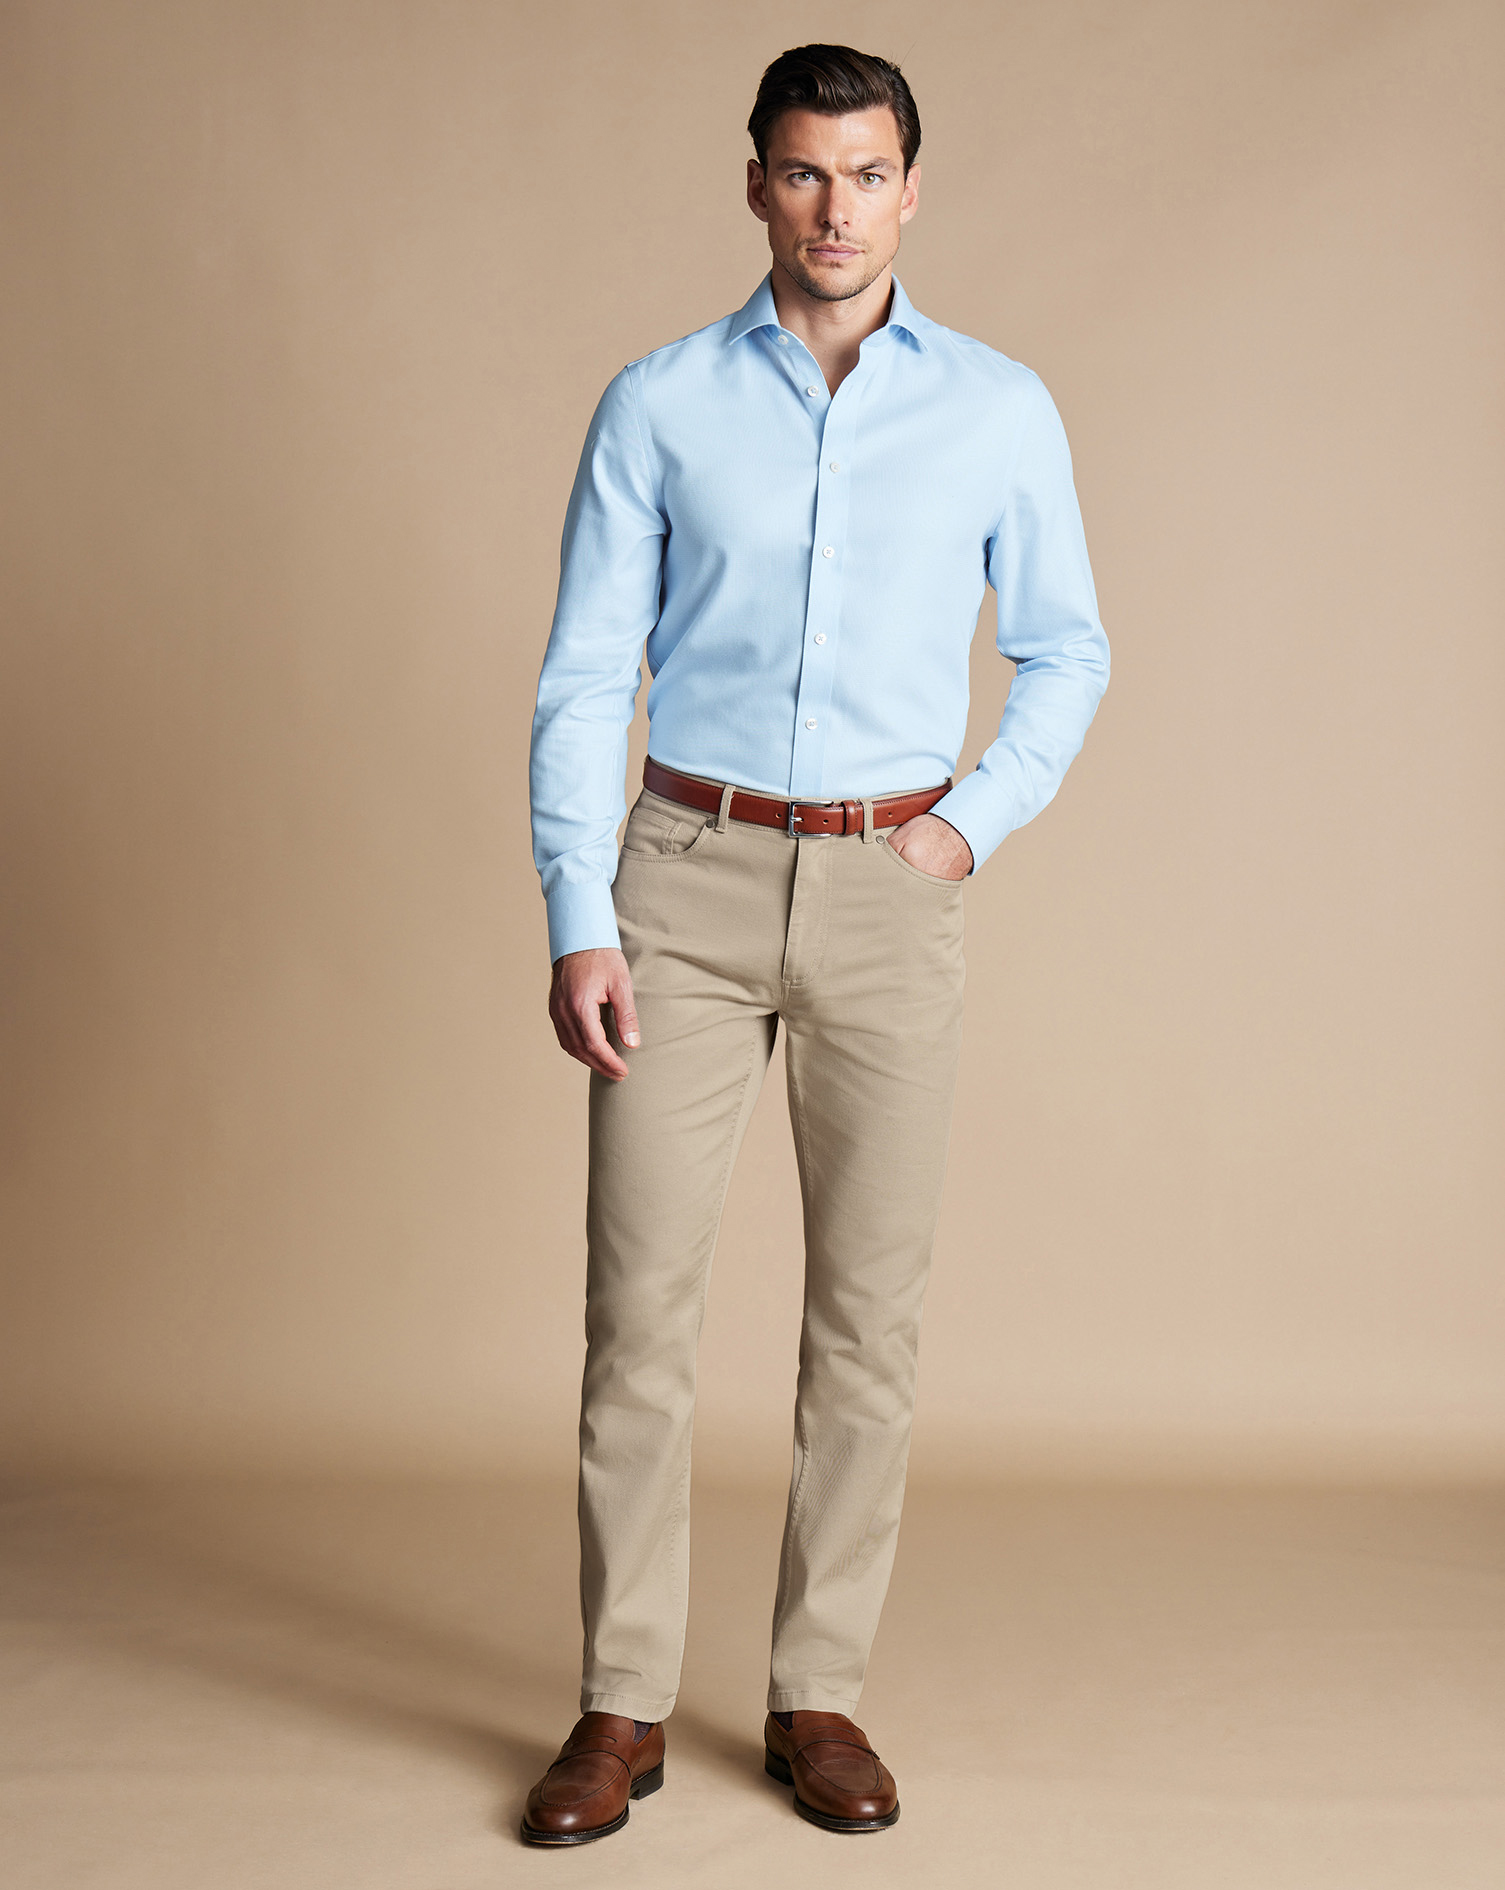 Men's Charles Tyrwhitt Twill 5 Pocket Jeans - Stone Neutral Size W36 L32 Cotton
